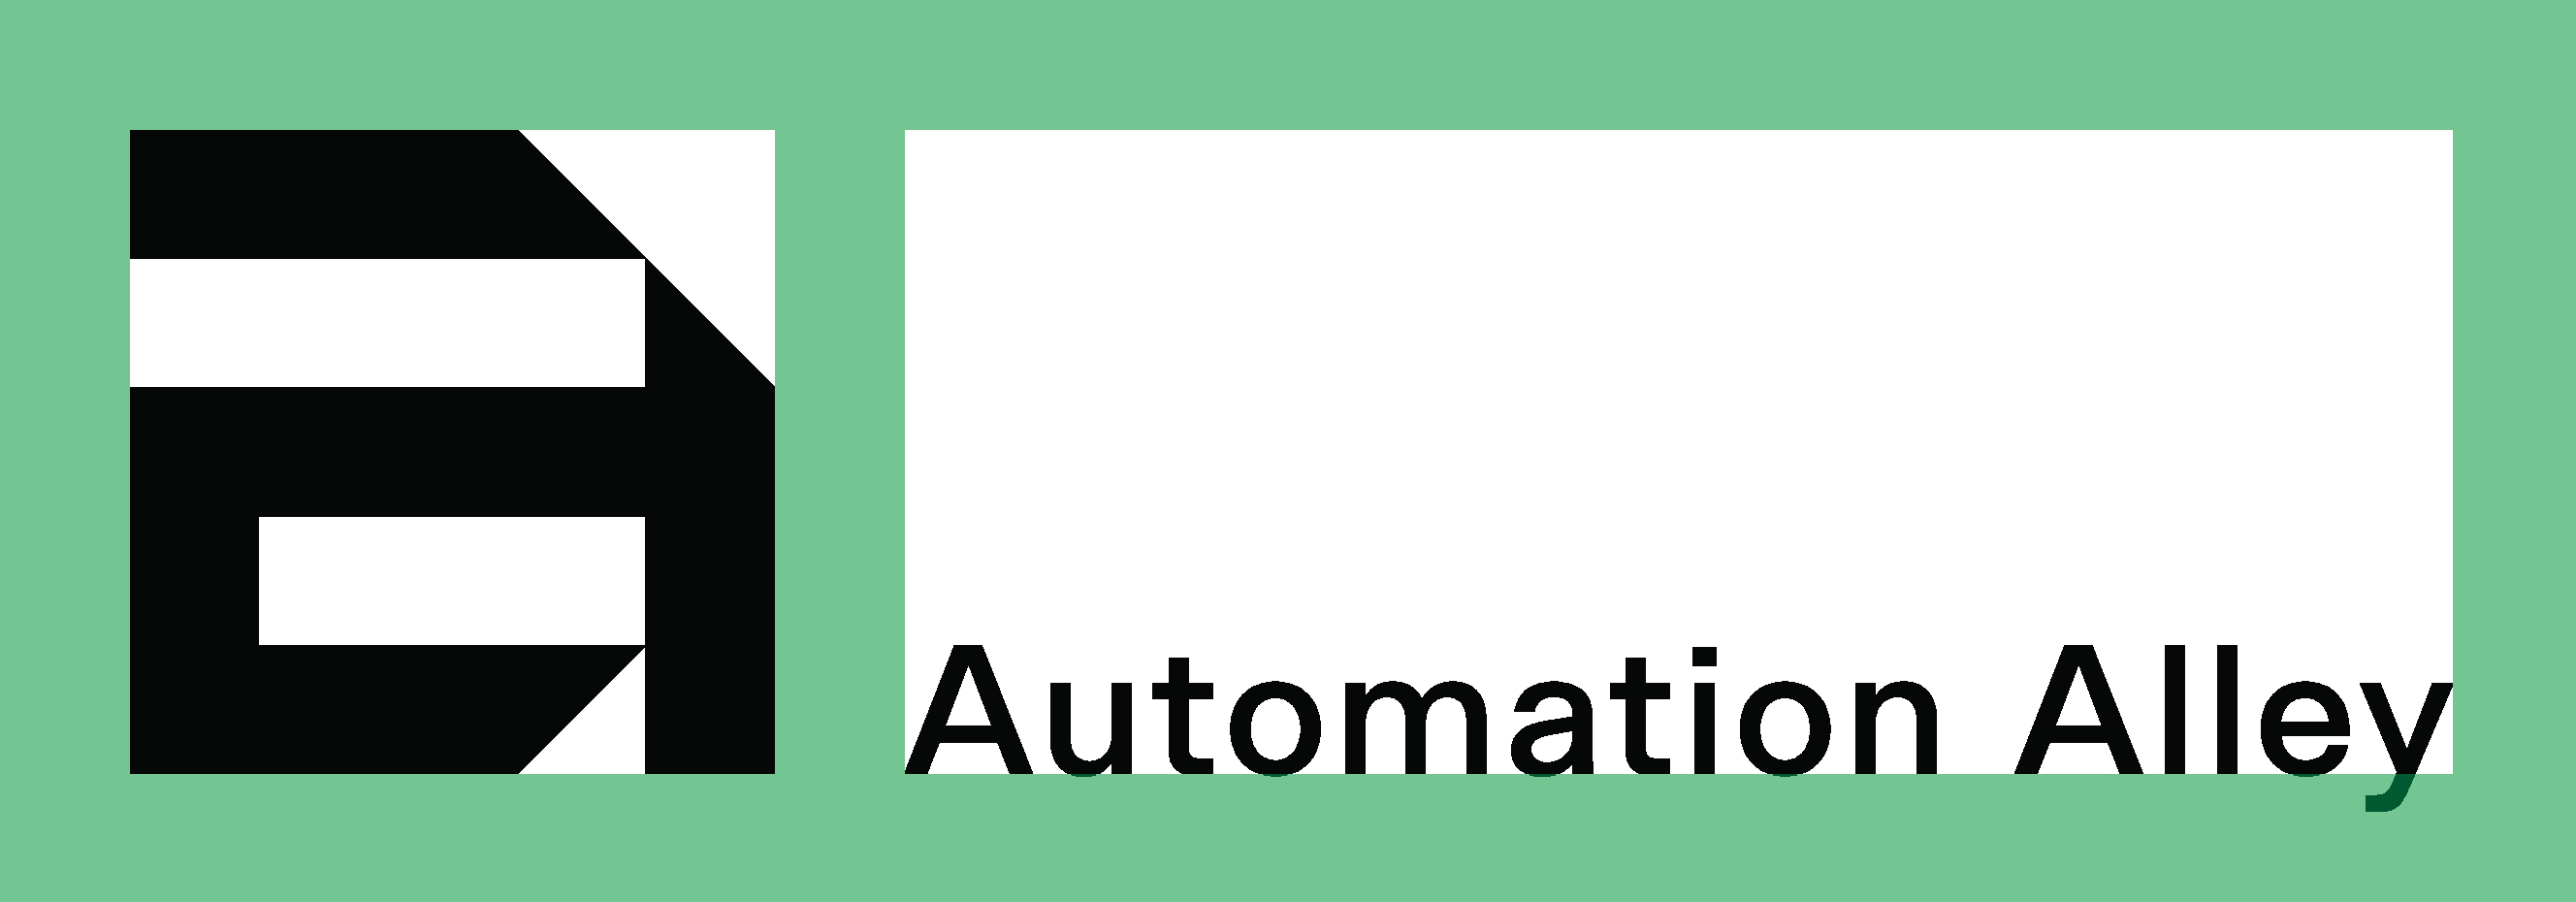 AutomationAlley-LOGO -edit.jpg